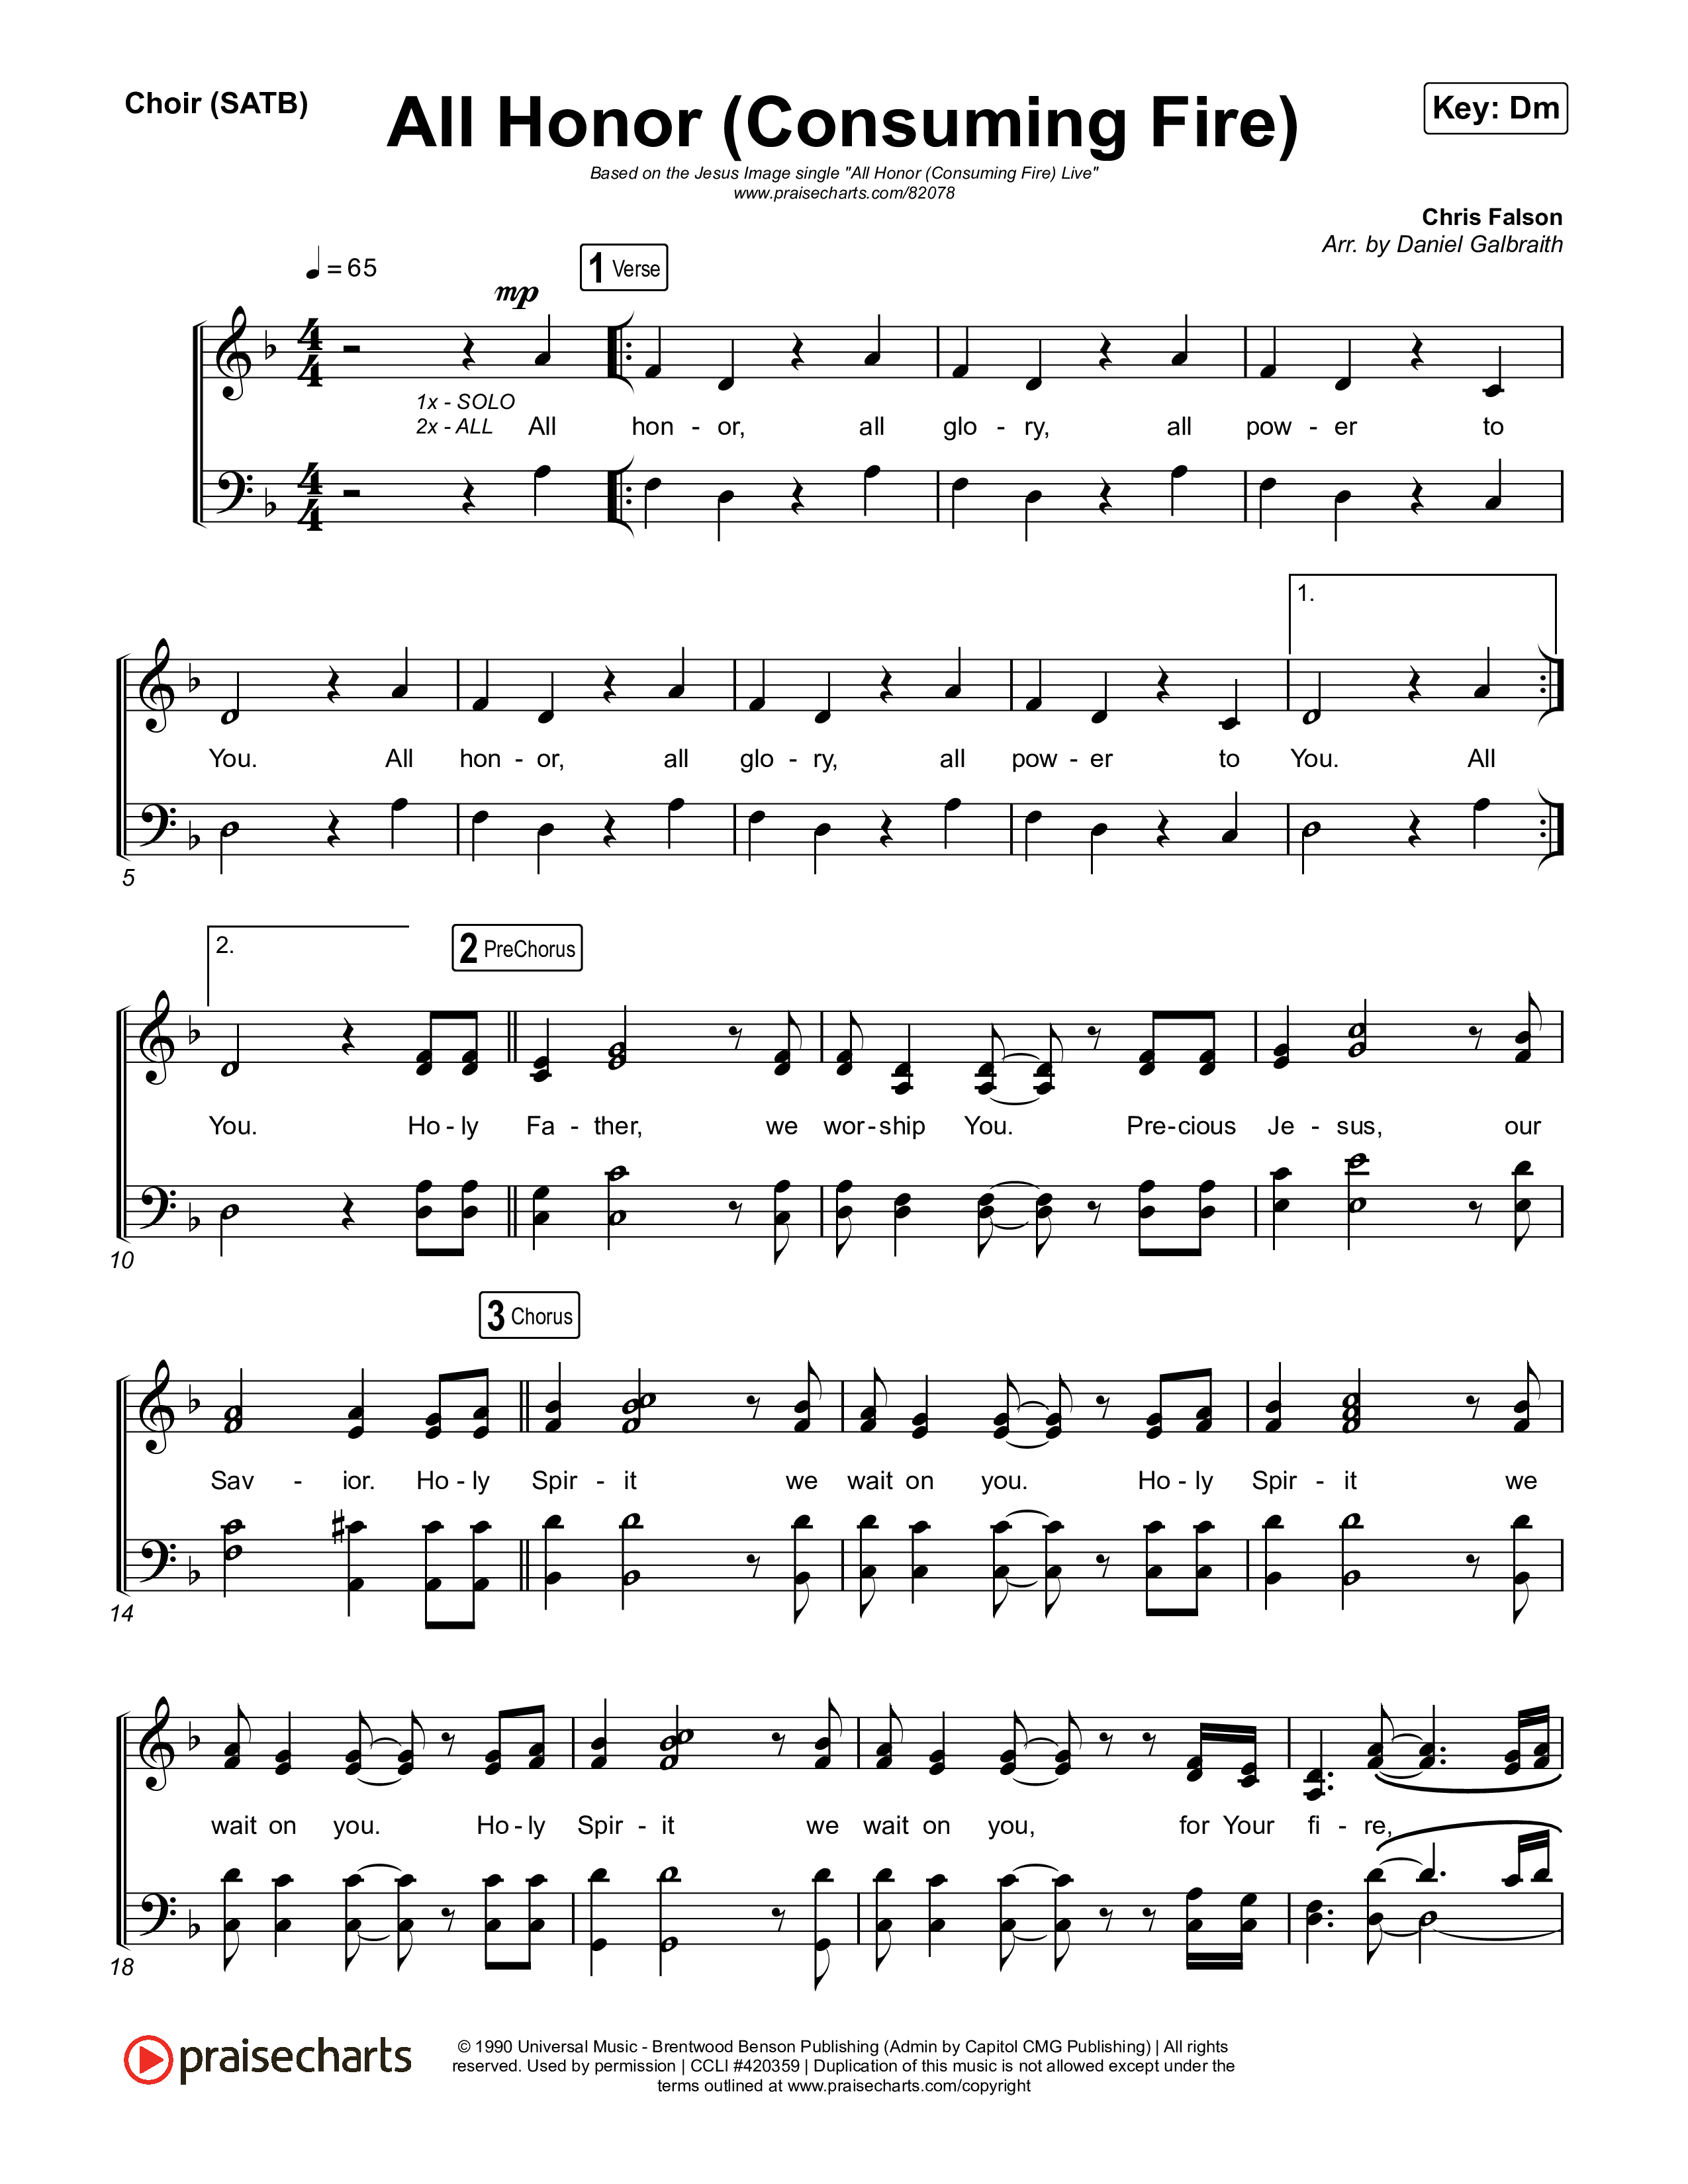 All Honor (Consuming Fire) Choir Sheet (SATB) (Jesus Image)